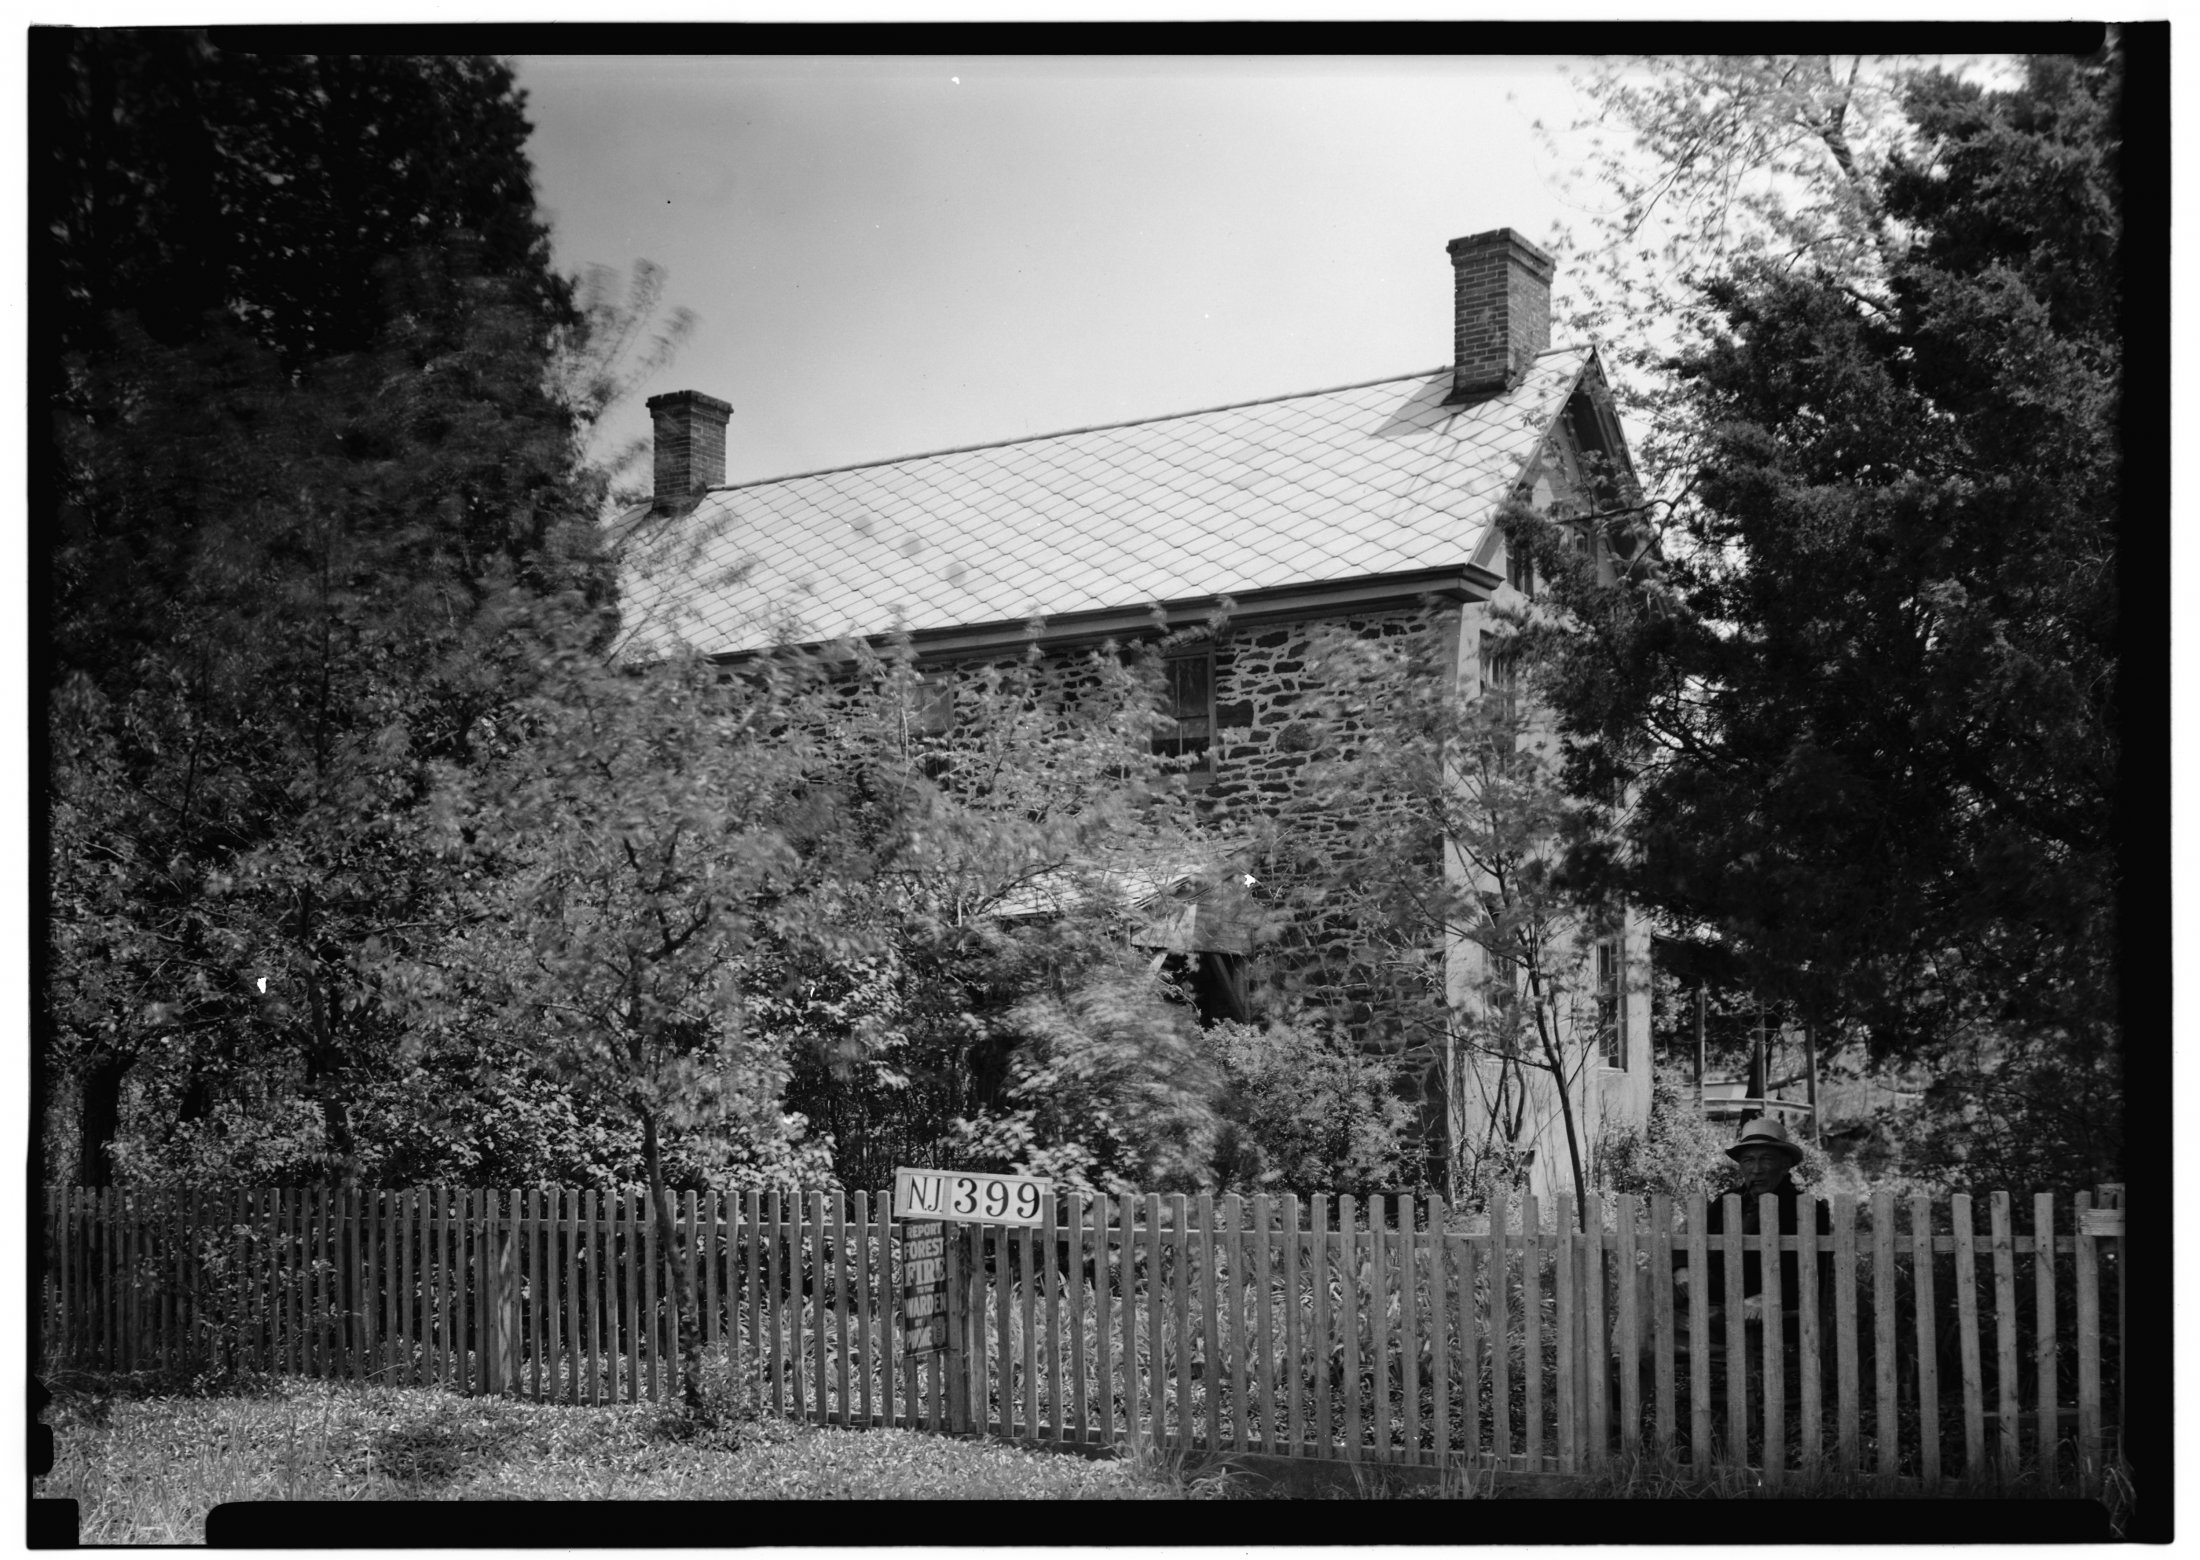 Leeds Point - Japhet Leeds House -  Moss Mill Road - Nathaniel R Ewan Photographer - May 7, 1937 - Exterior - West view - HABS